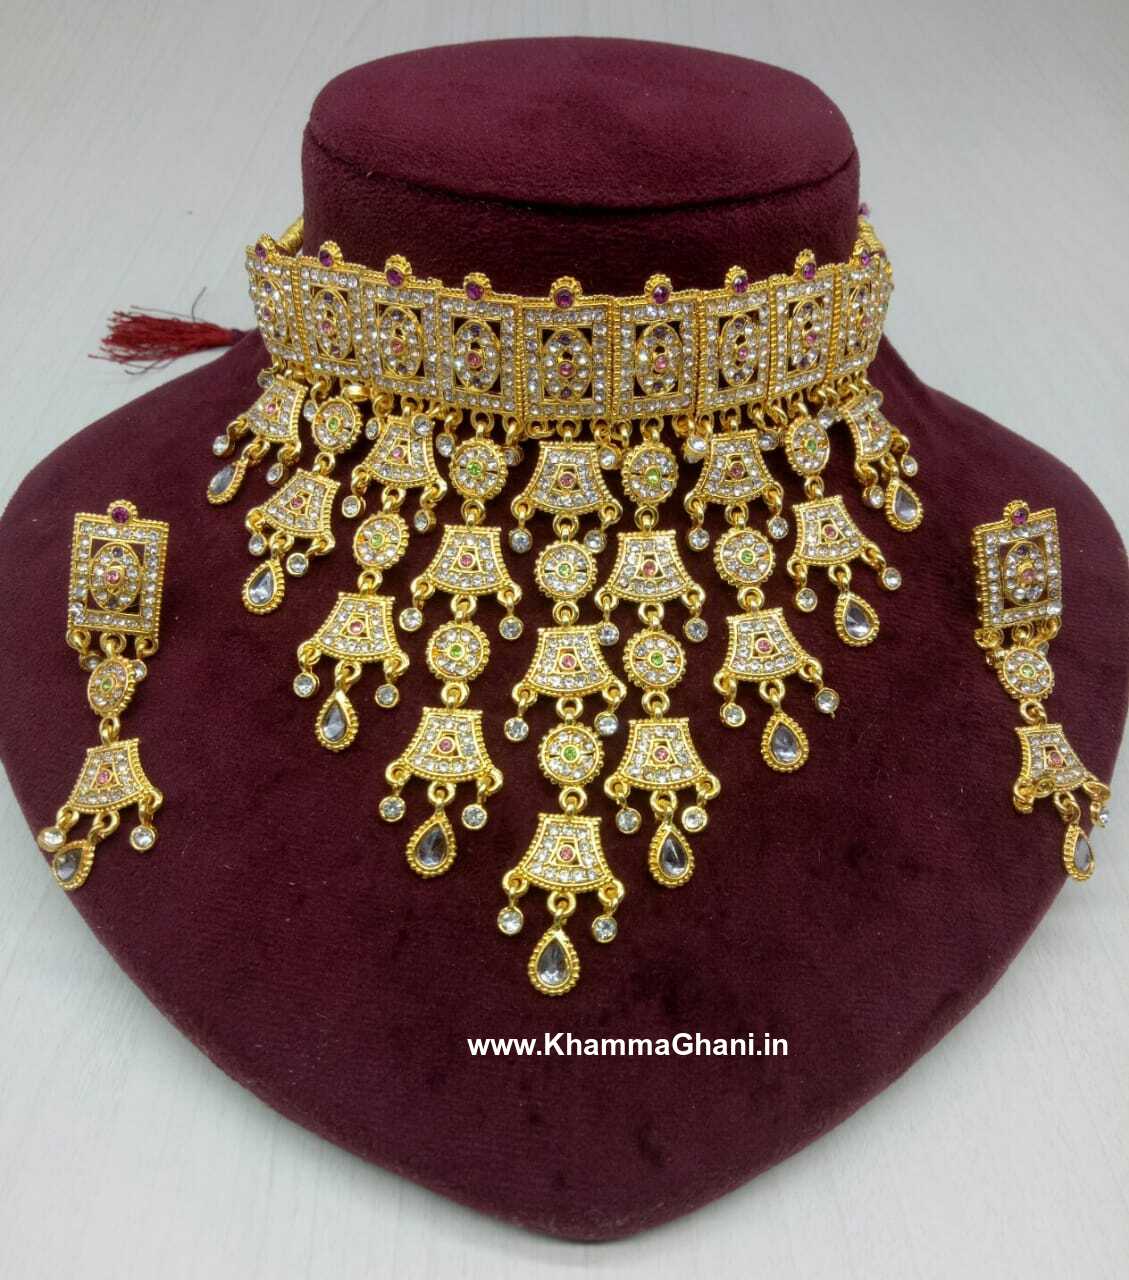 Rajasthani Look Aad with Earrings